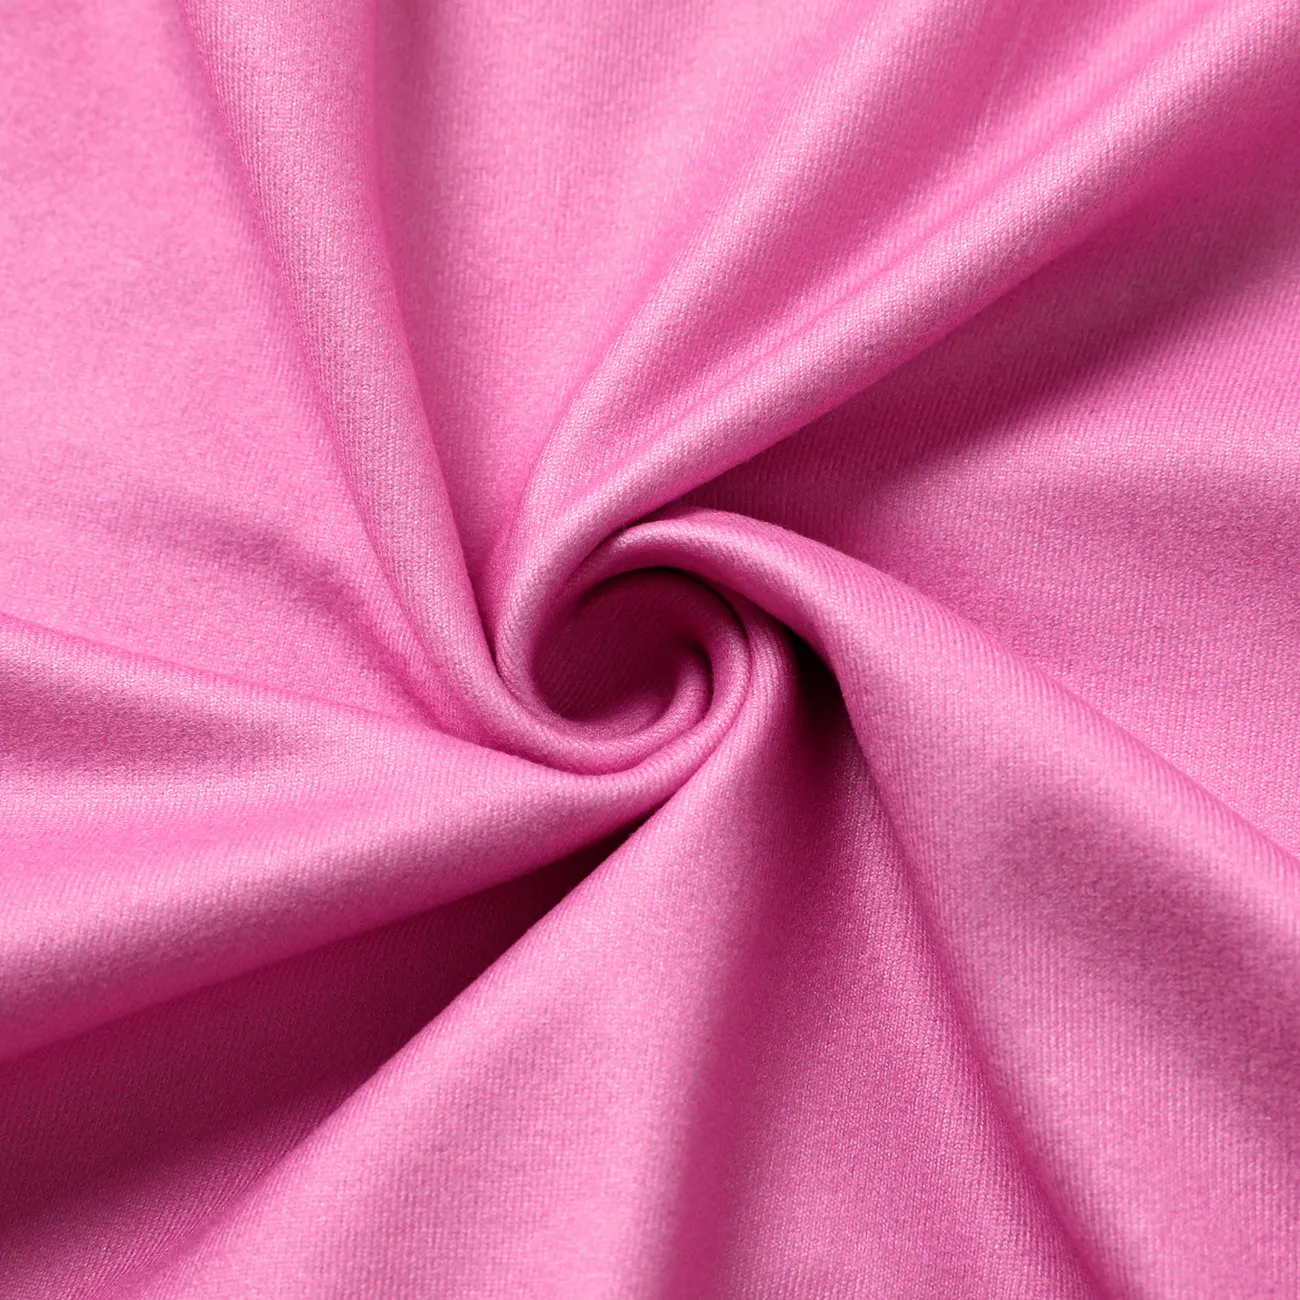 L.O.L. SURPRISE! Kid Girl 2pcs Knot Hem Long-sleeve Top and Allover Print Flared Pants Set  Pink big image 1